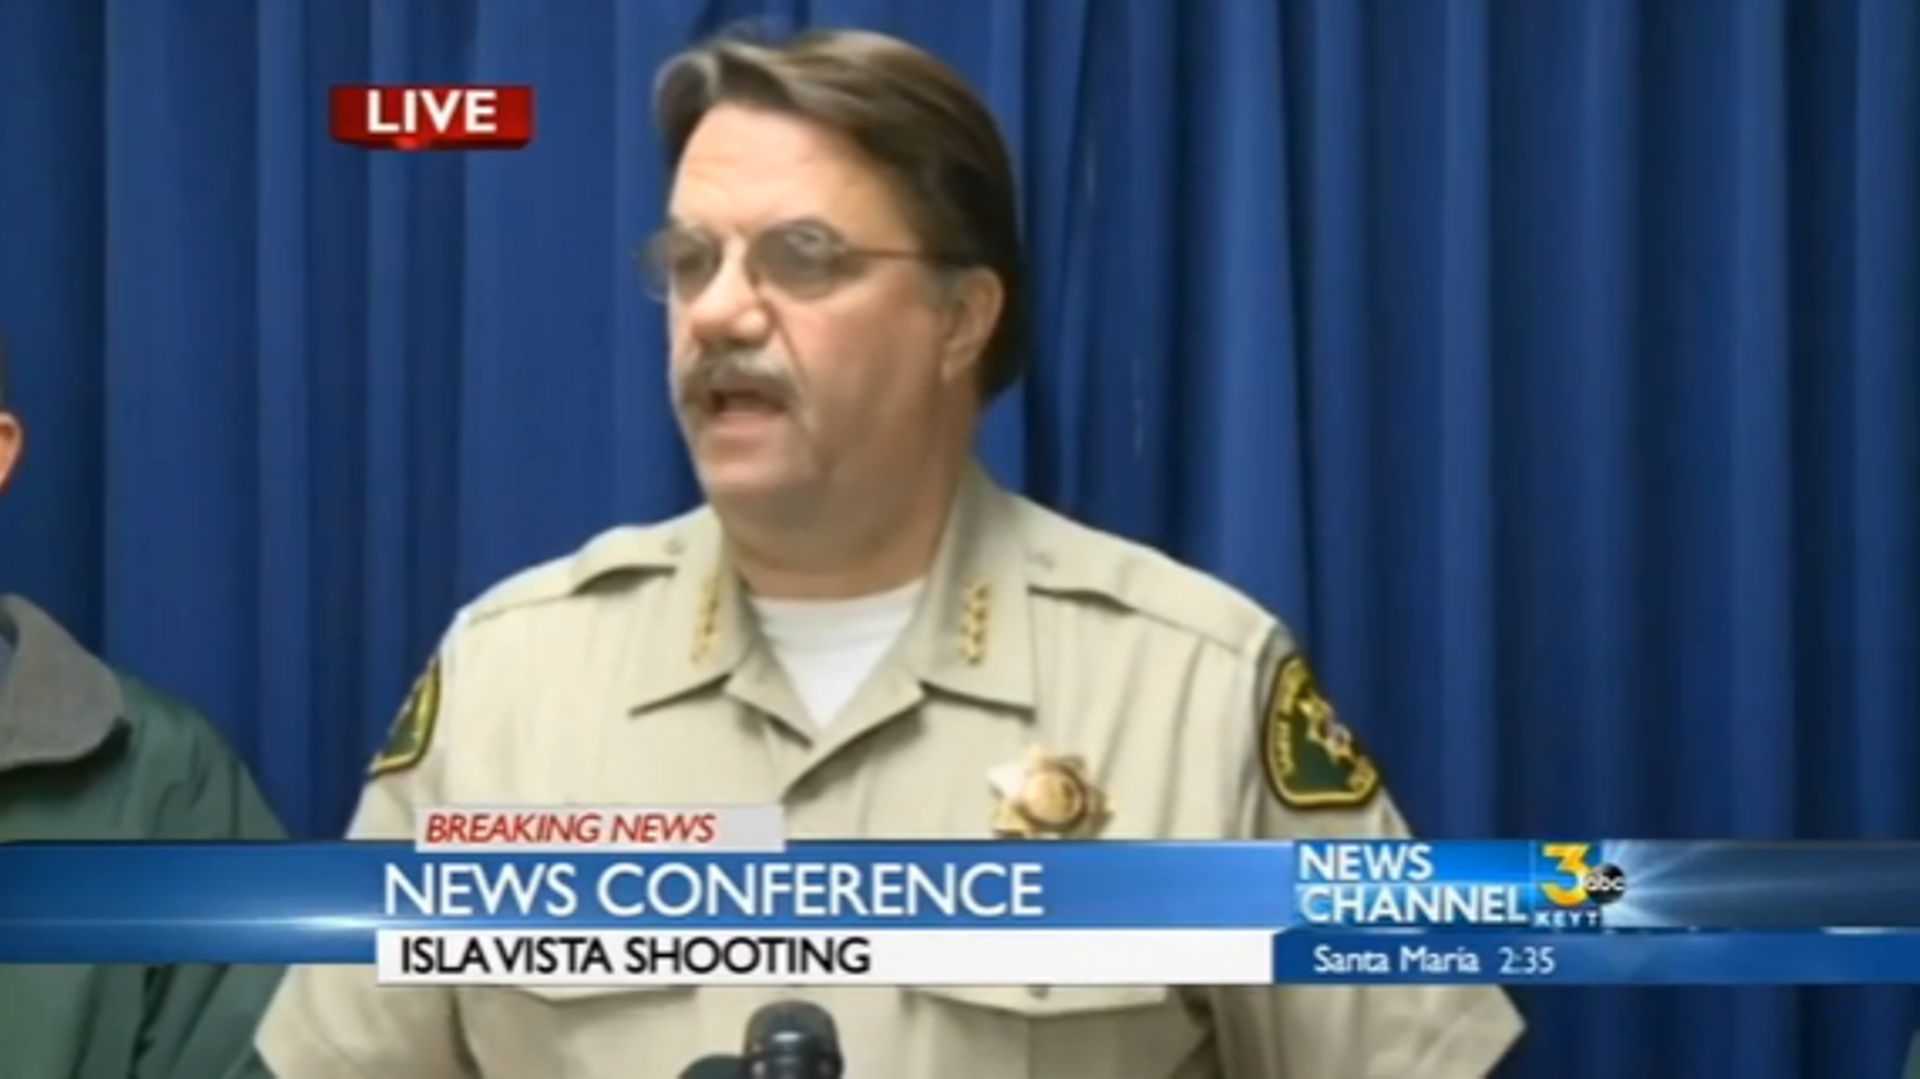 Le sheriff Bill Brown annonce la mort de 7 personnes dans la fusillade de Isla Vista